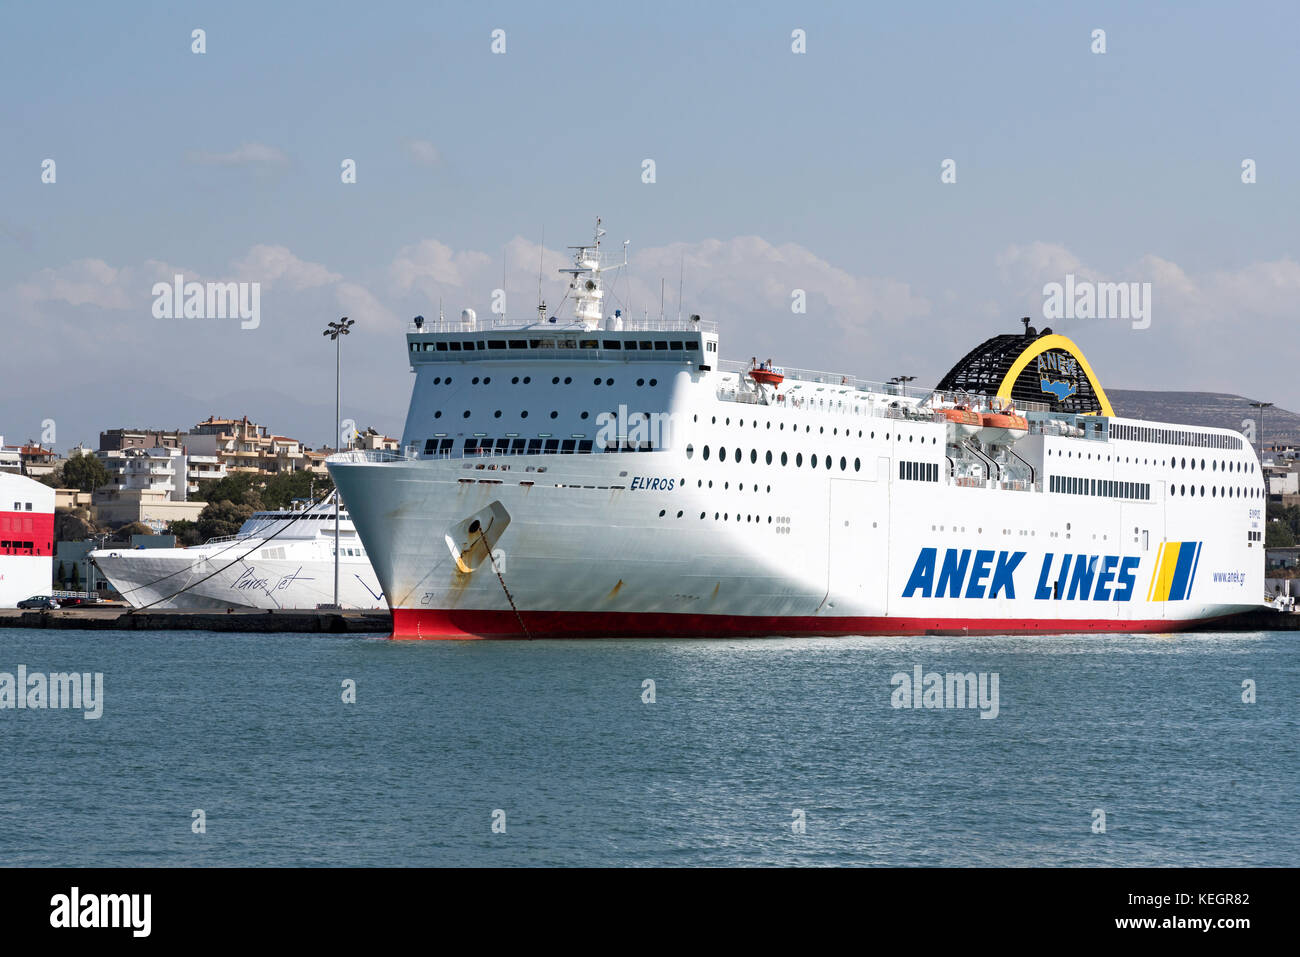 The Port of Heraklion, Crete, Greece, October 2017. Anek Lines company ...